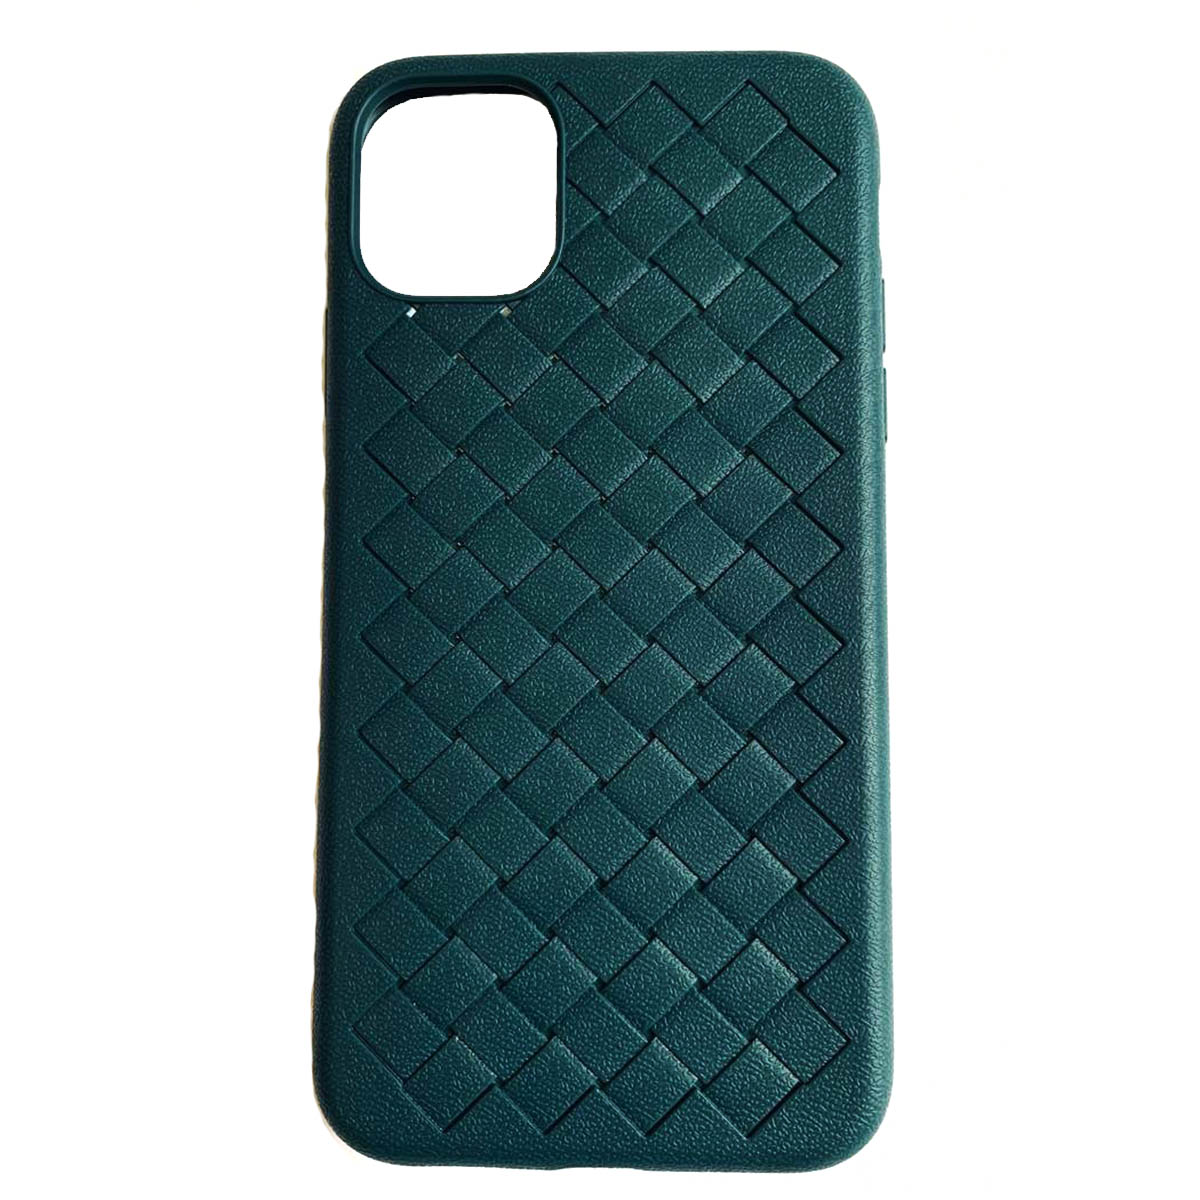 Чехол накладка для APPLE iPhone 12, iPhone 12 Pro (6.1), силикон, плетение, цвет темно зеленый